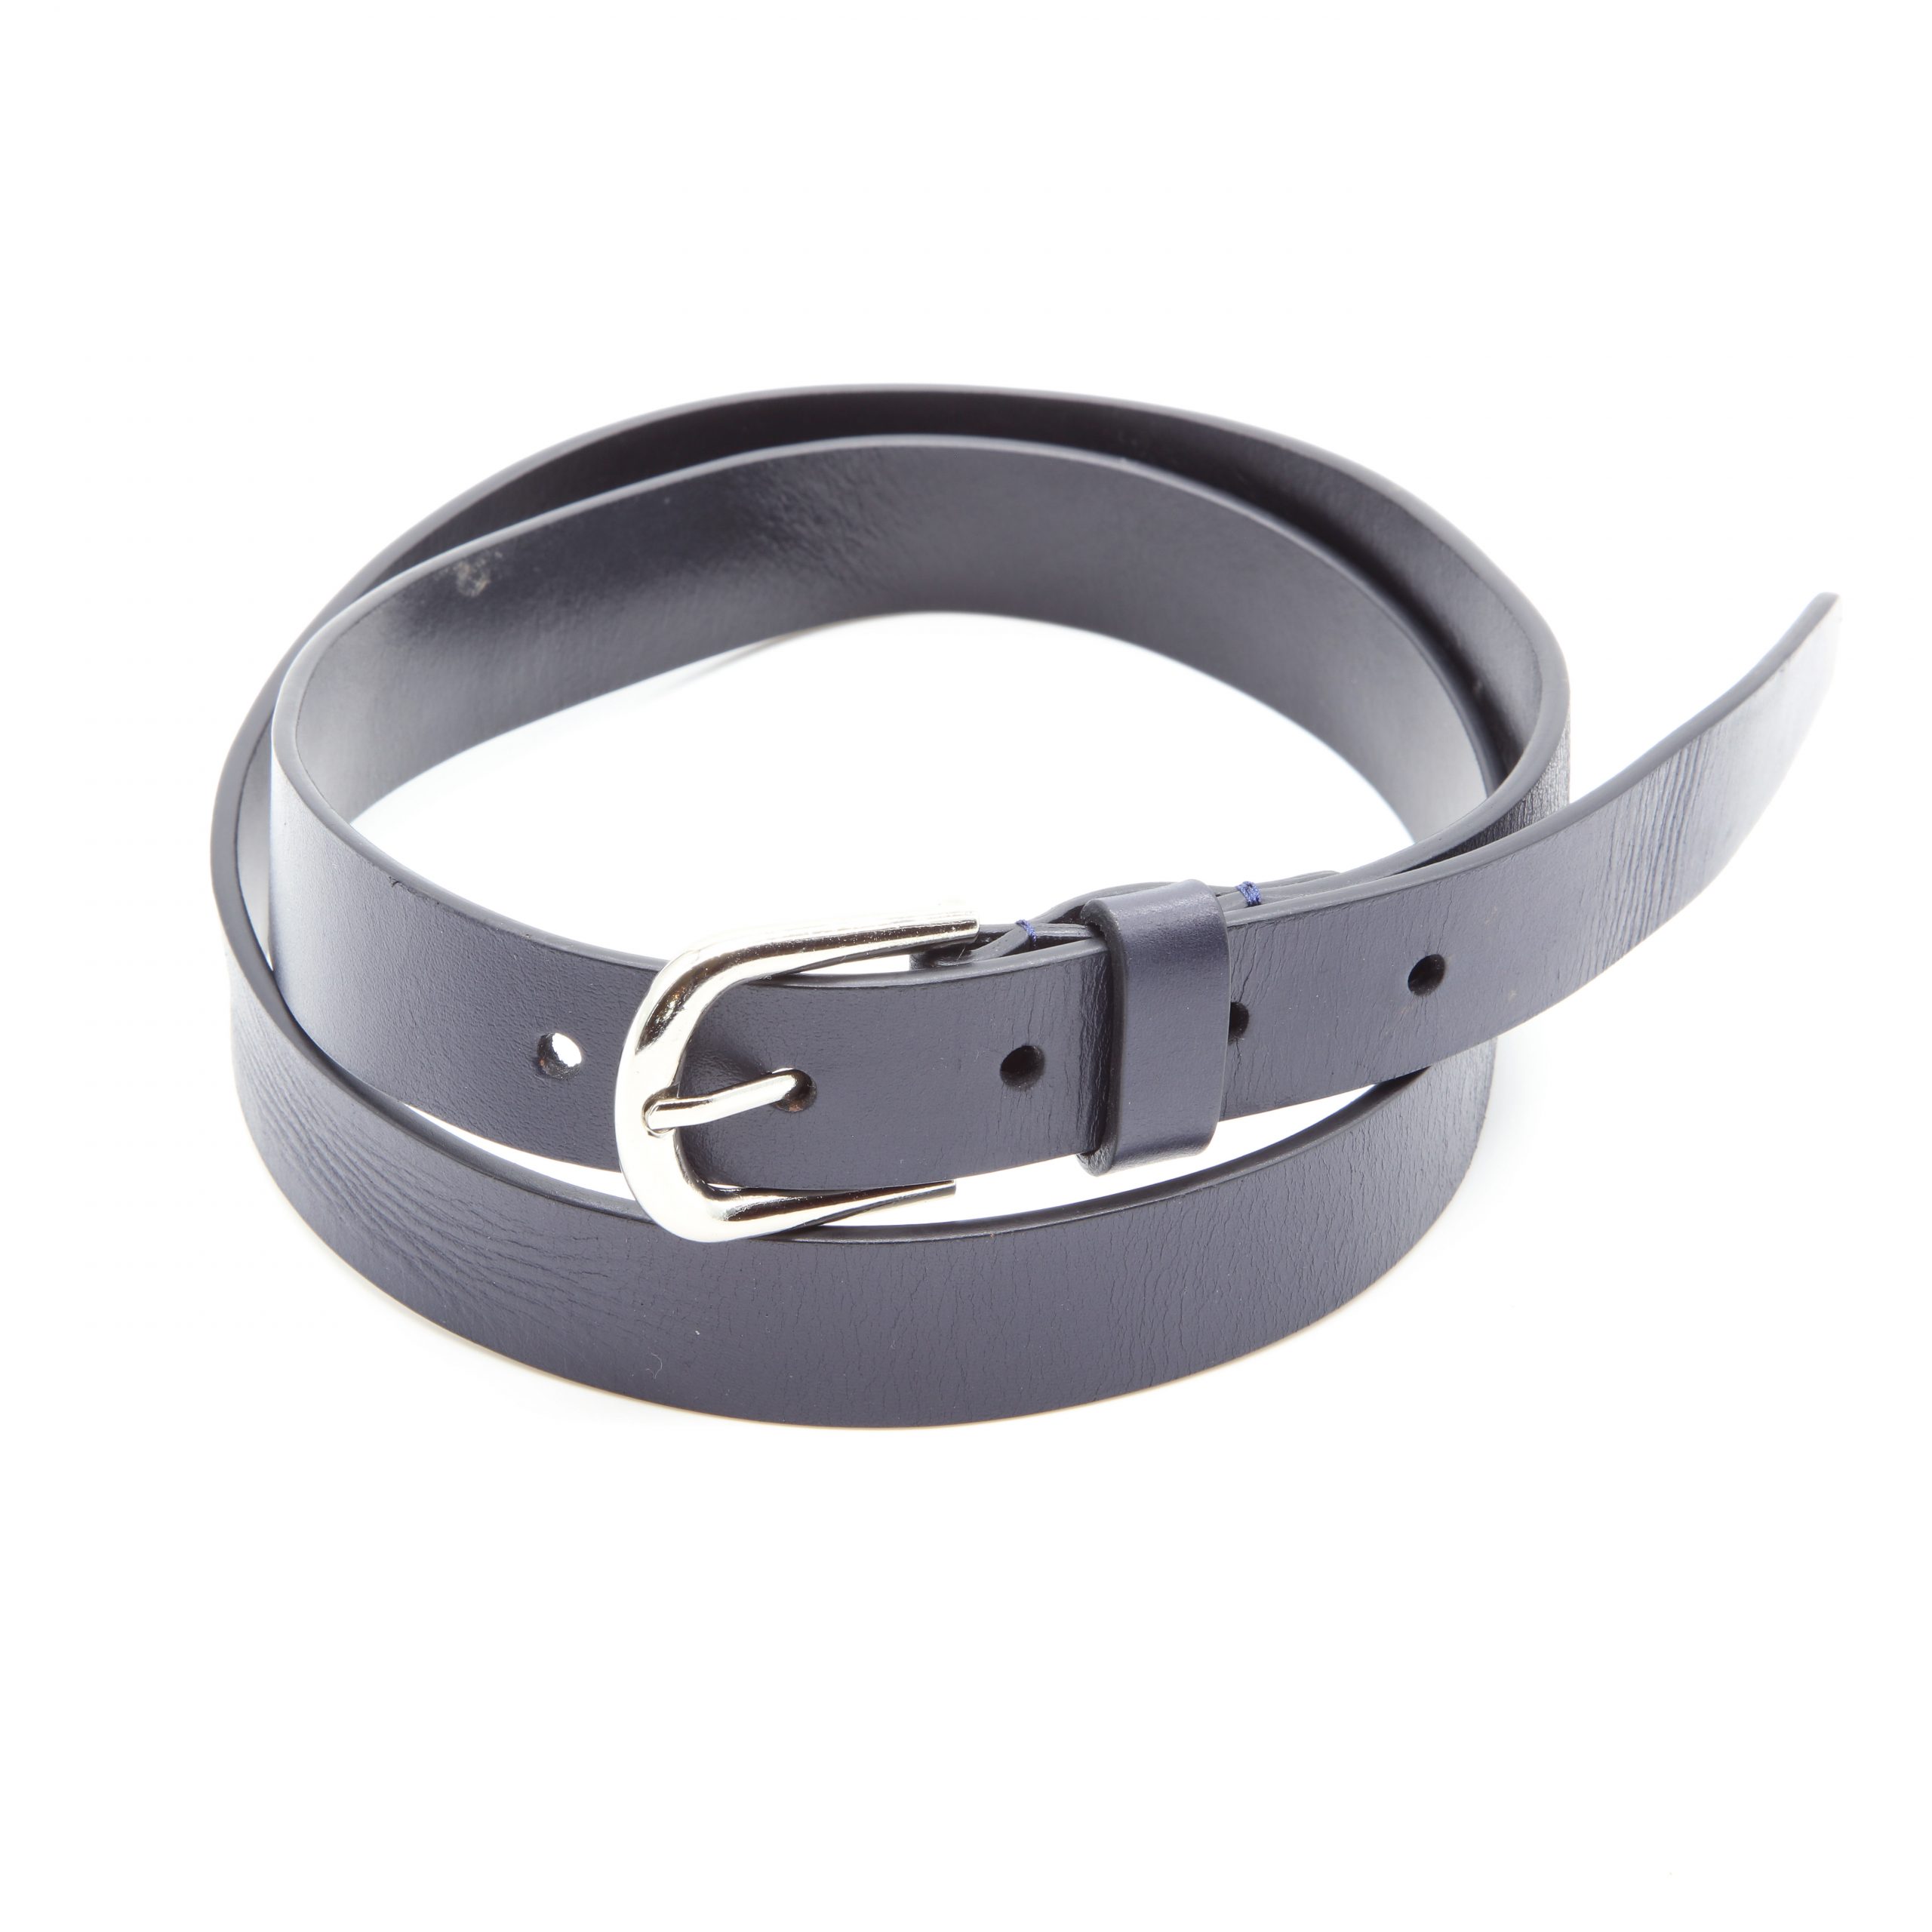 Lappella luxury soft navy leather Victoria dress belt.